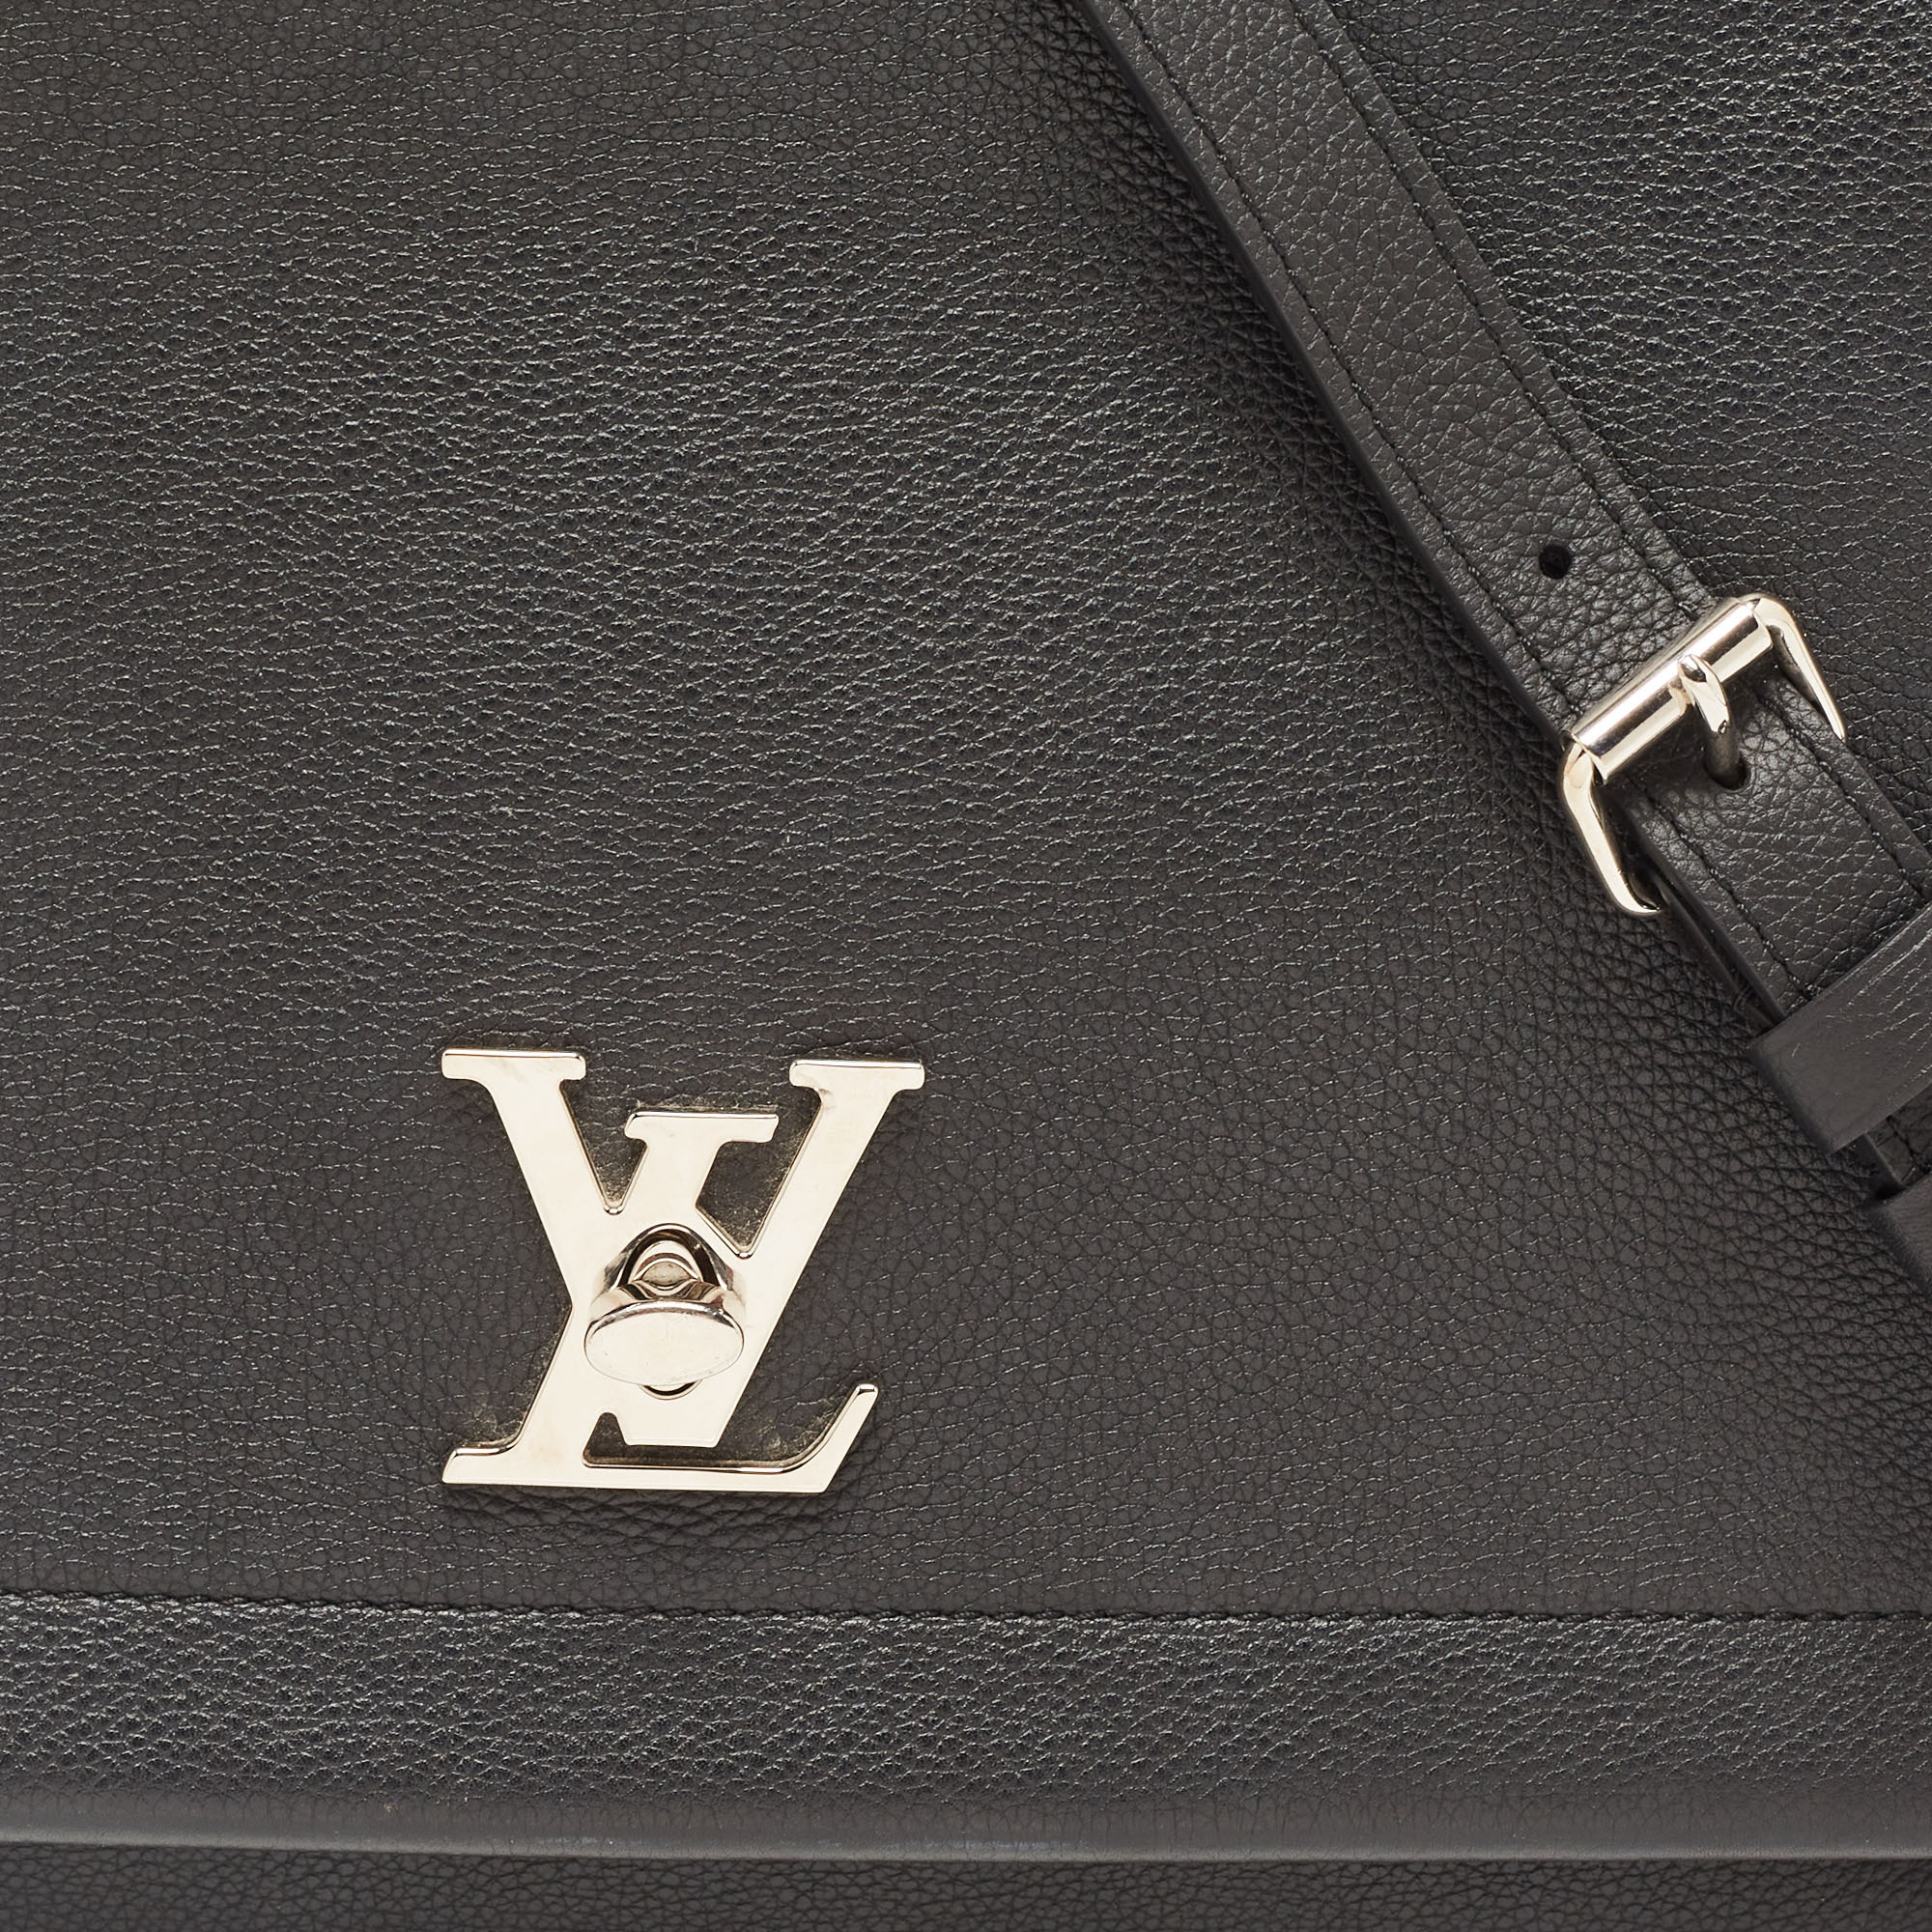 Louis Vuitton Black Leather Lockme II Top Handle Bag